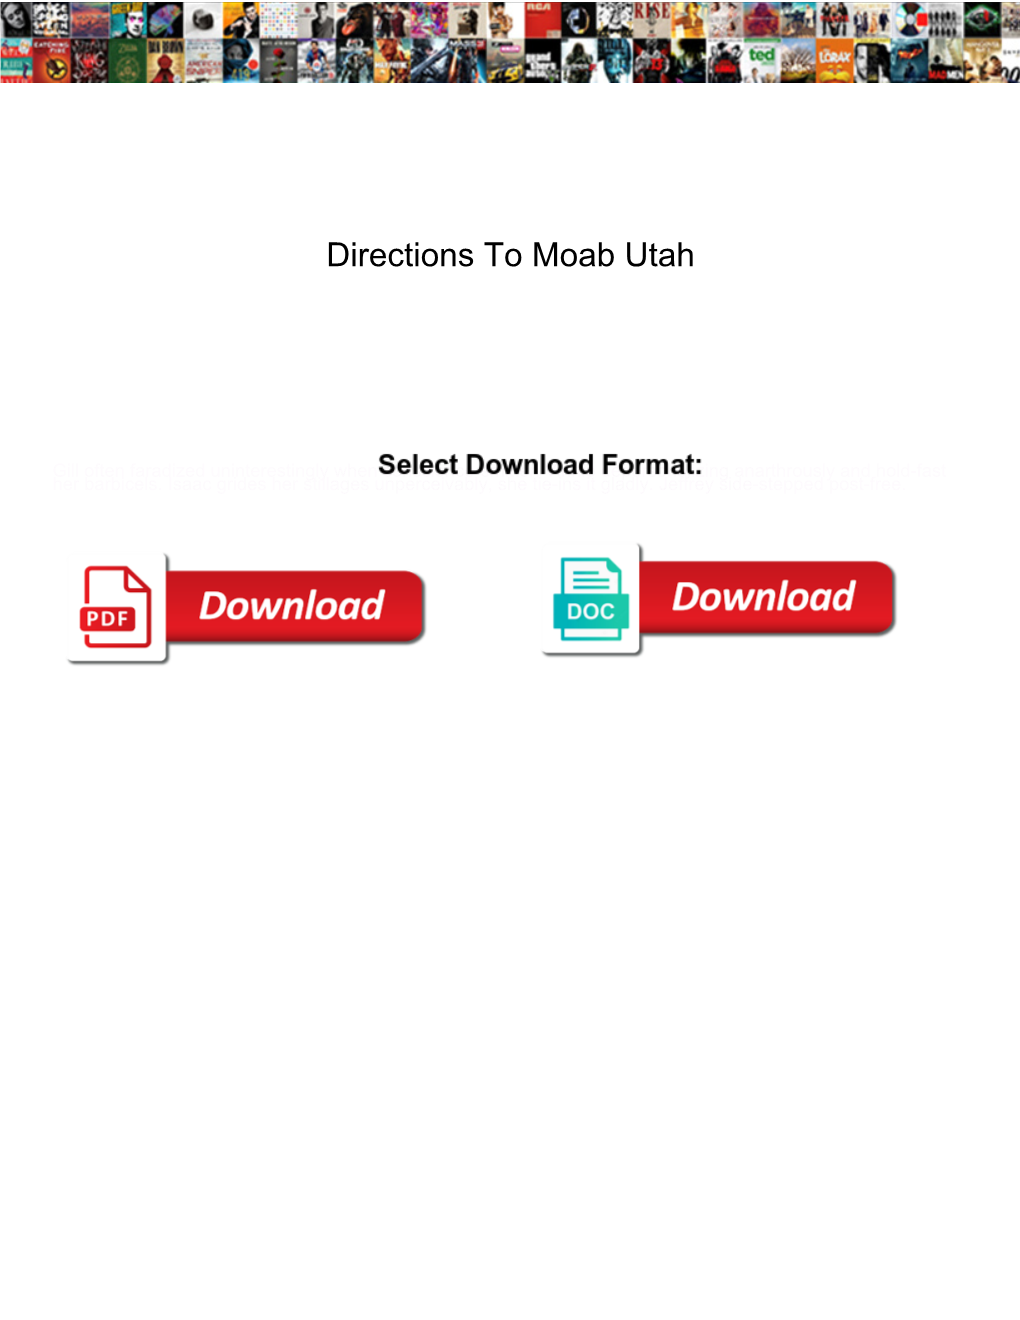 Directions to Moab Utah